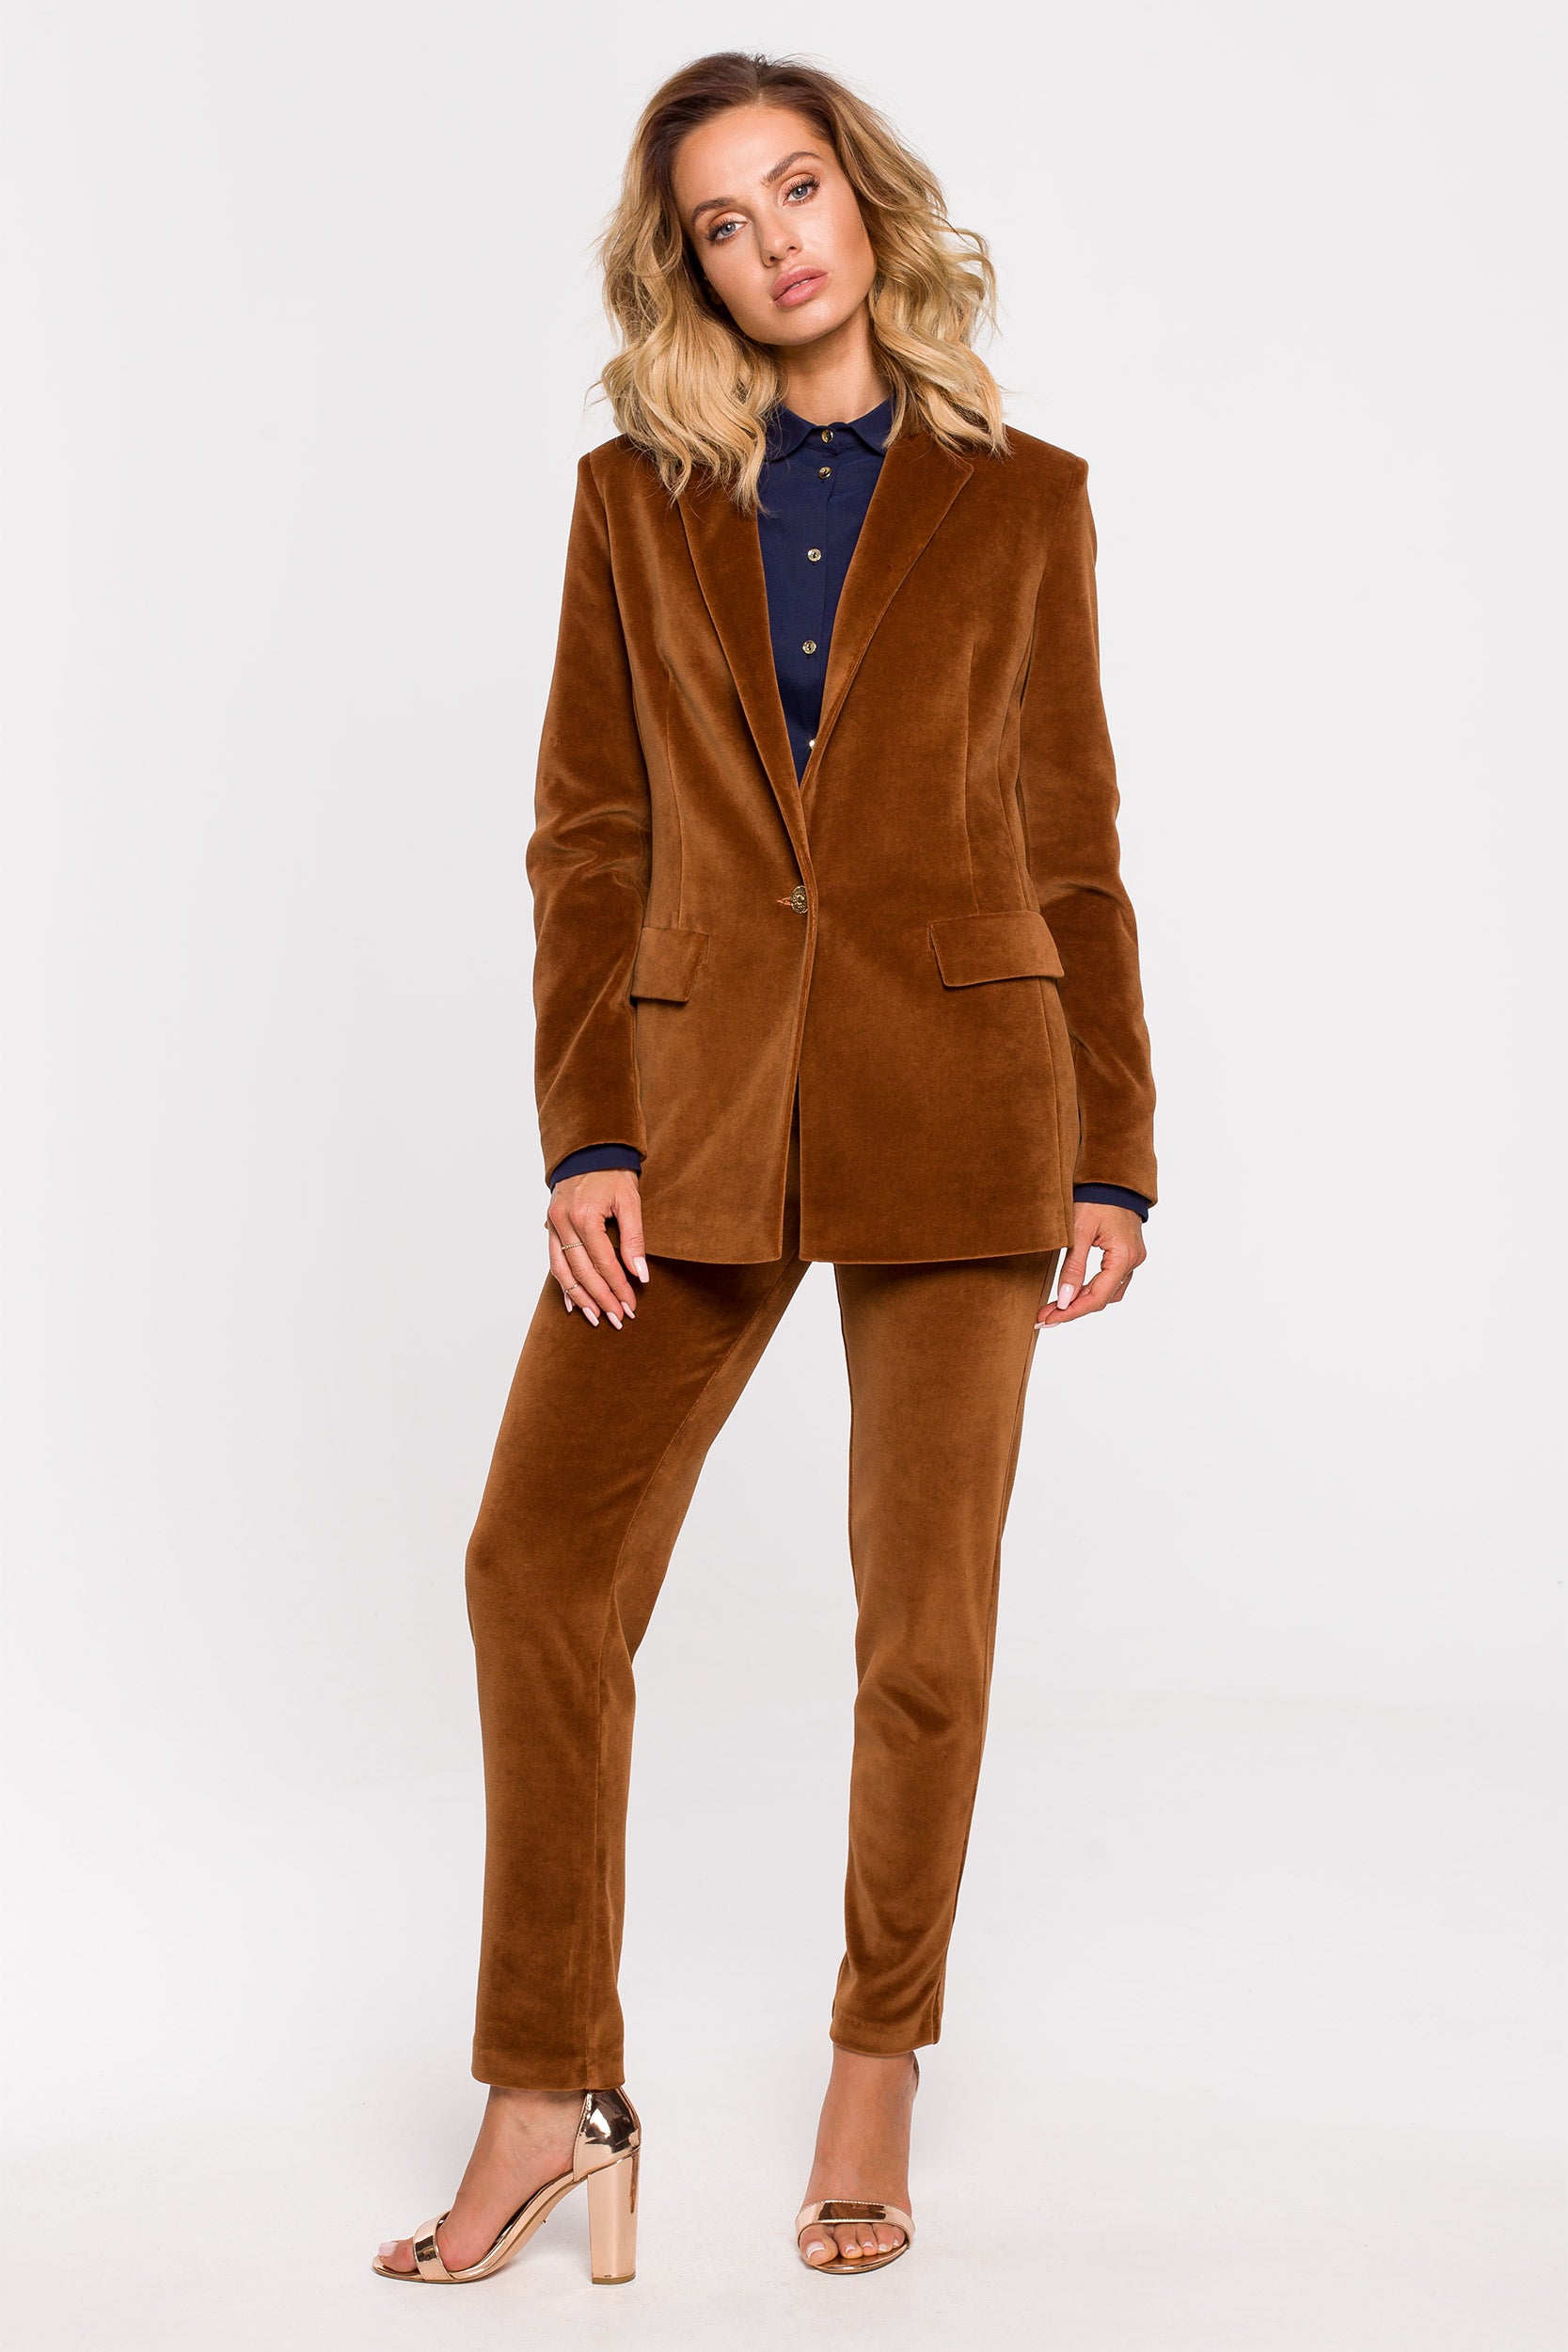 Burnt Orange Velvet Blazer Suit Separate. Our newest addition in the trendy captivating hue of burnt orange. 